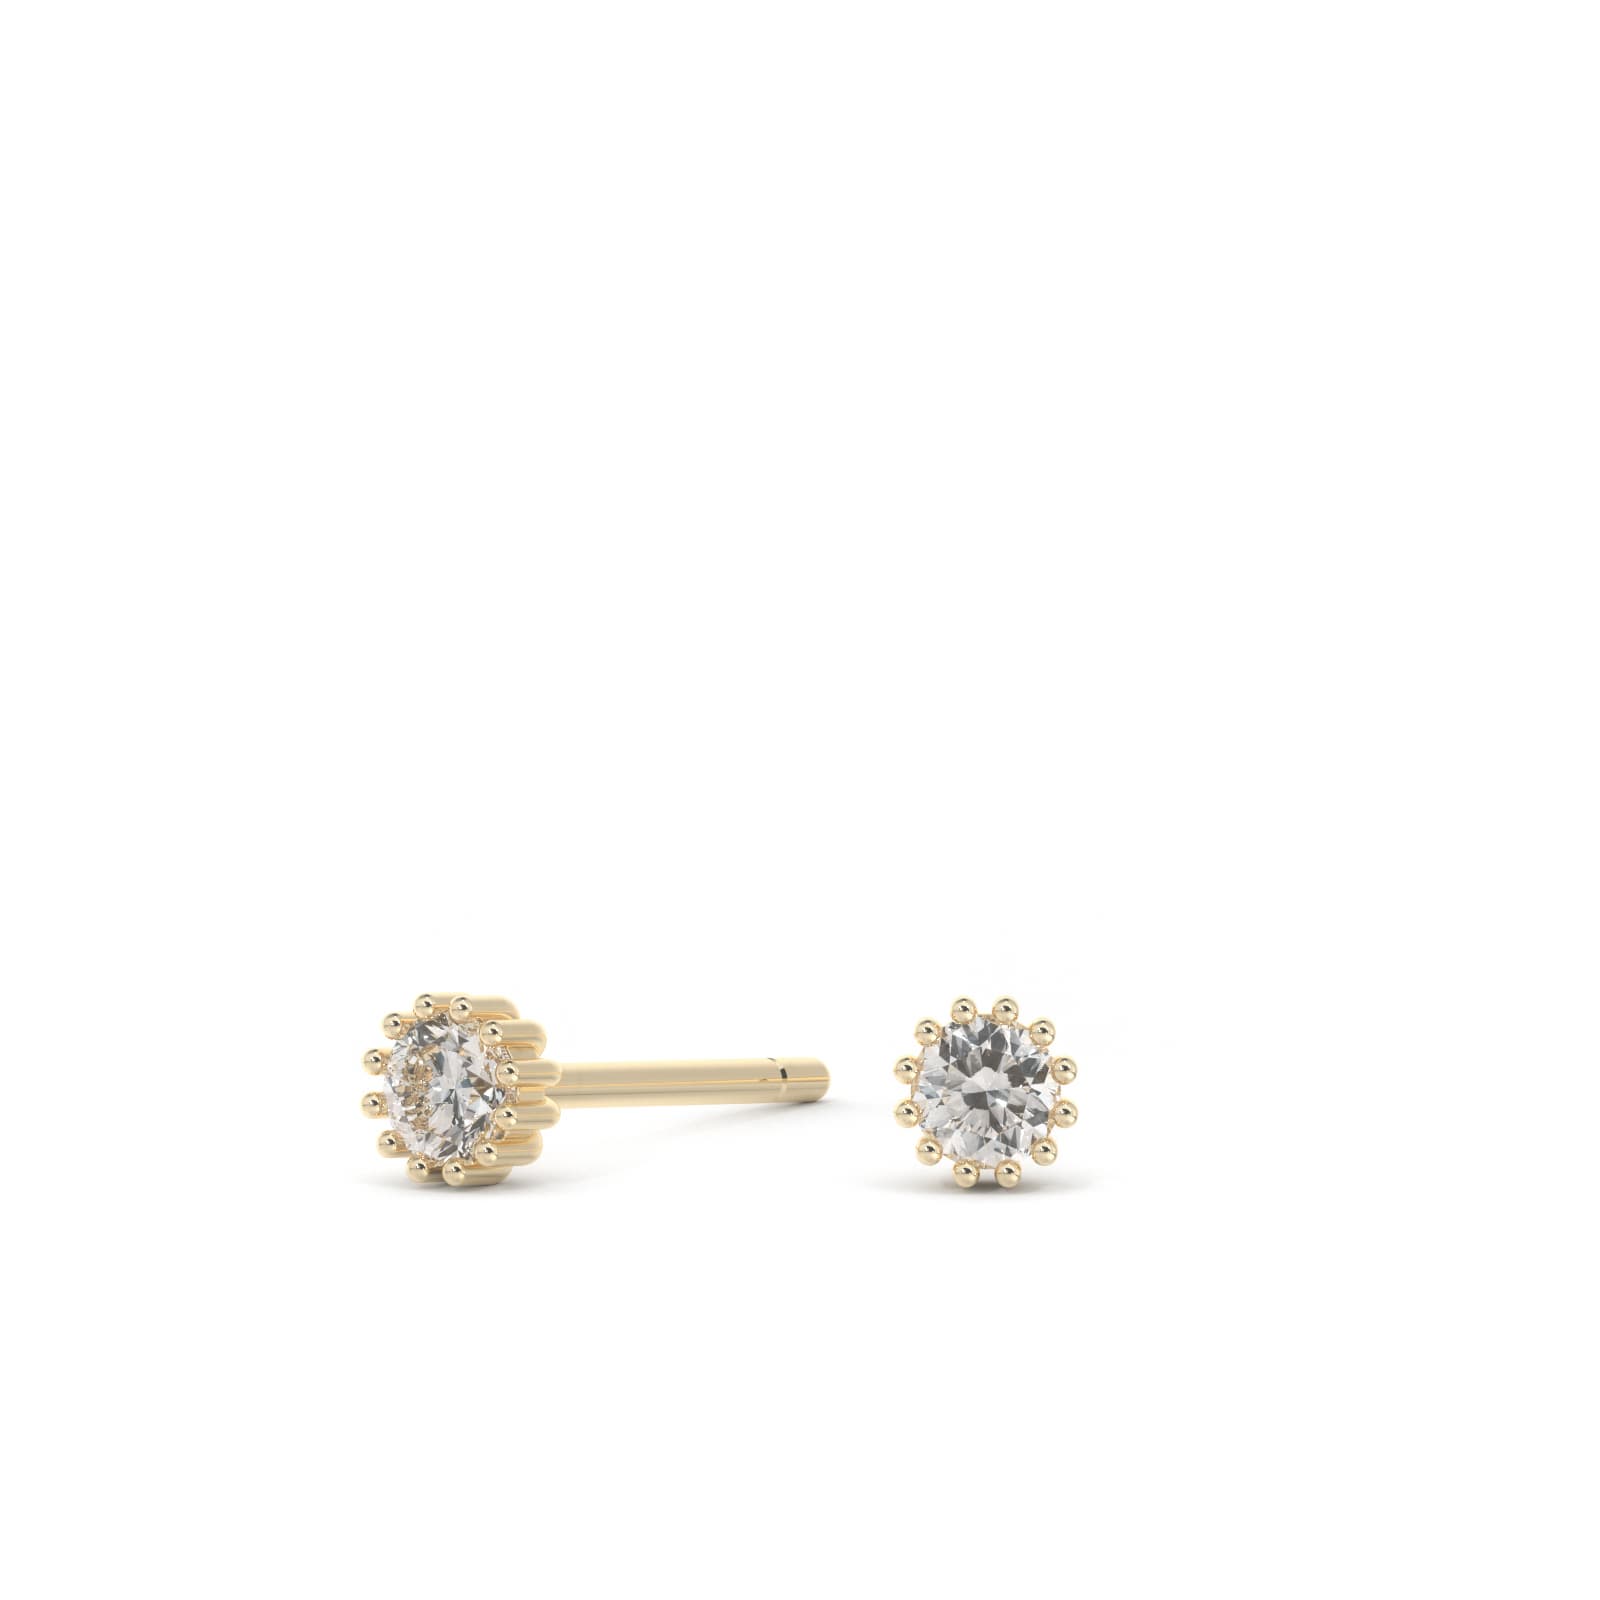 [1ING] Swarovski Zirconia Stud Earrings, 14K Gold